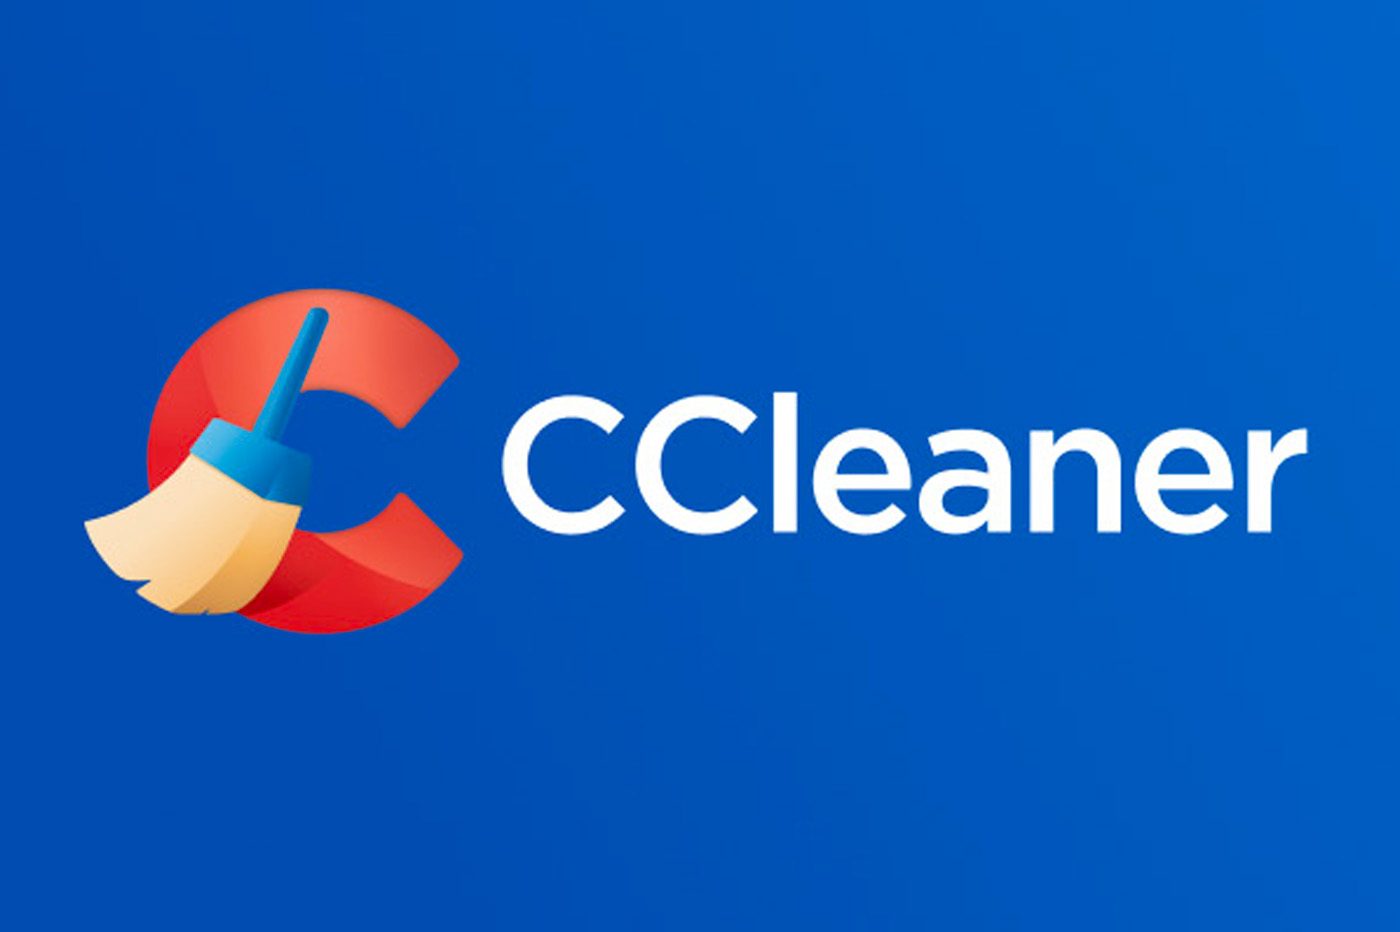 CCleaner Pro